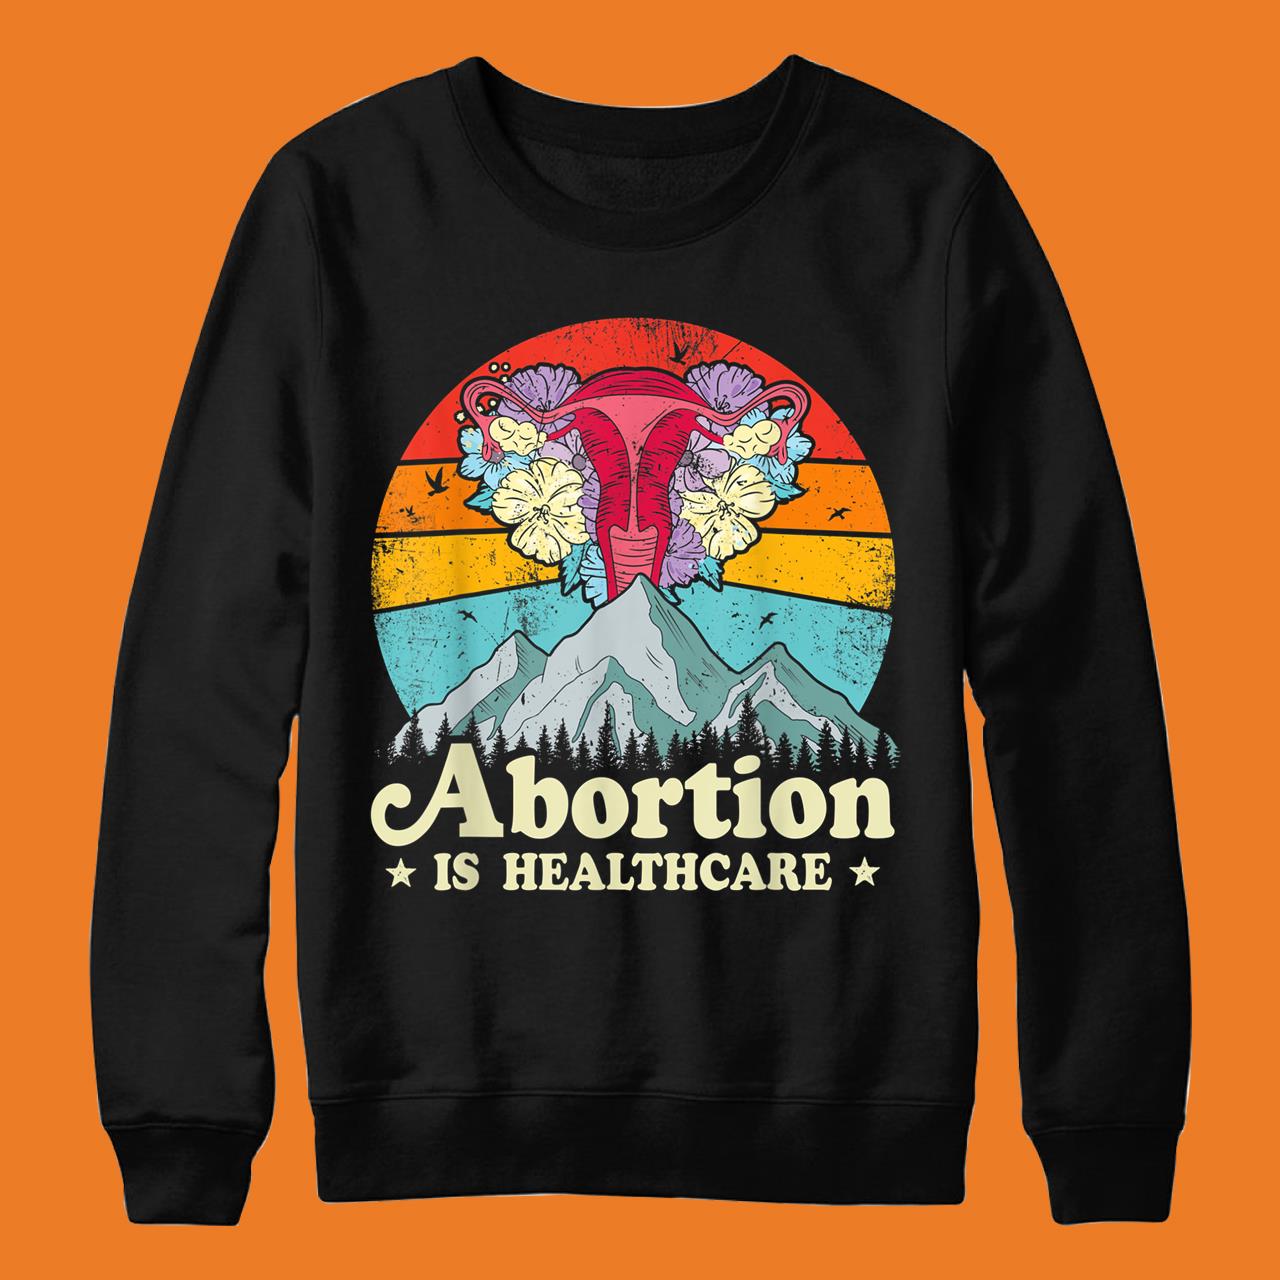 Abortion Is Healthcare Feminist Feminism Women’s Pro Choice T-Shirt